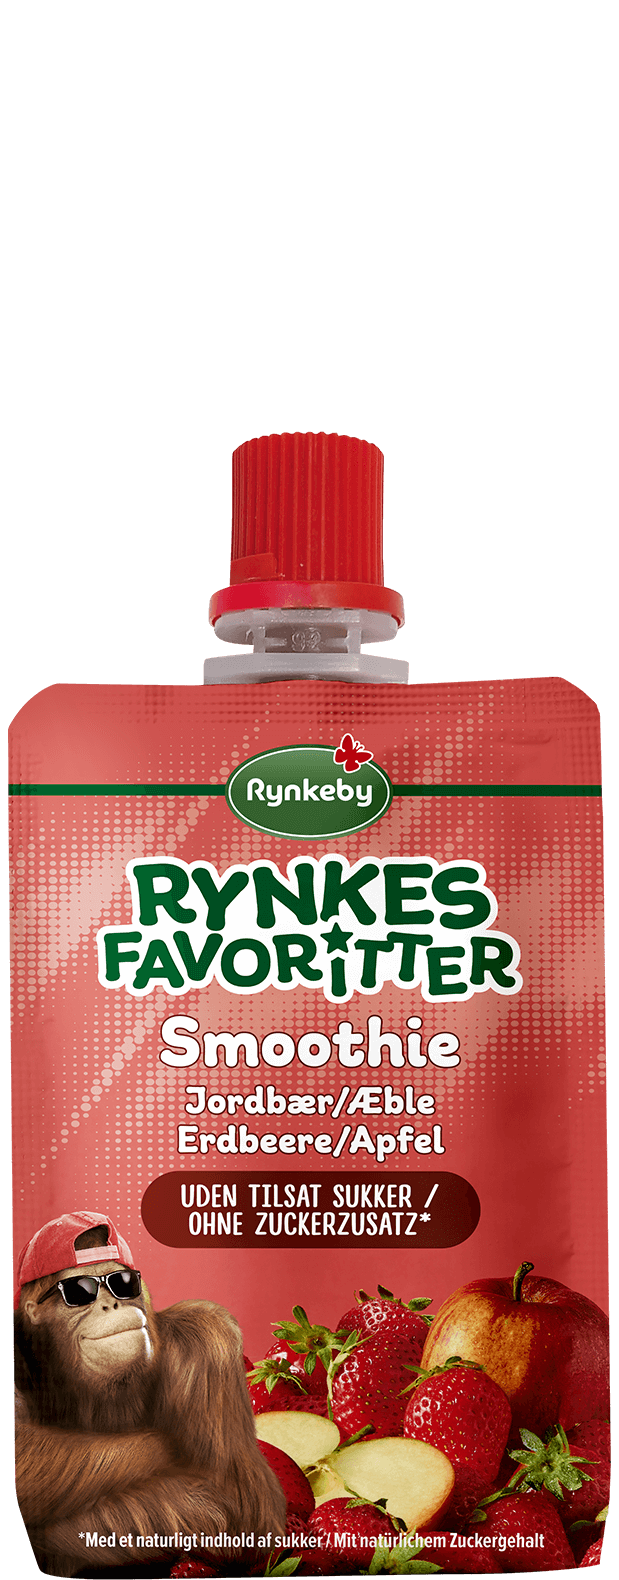 Rynkes Favoritter Jordbaer/Aeble Smoothie 